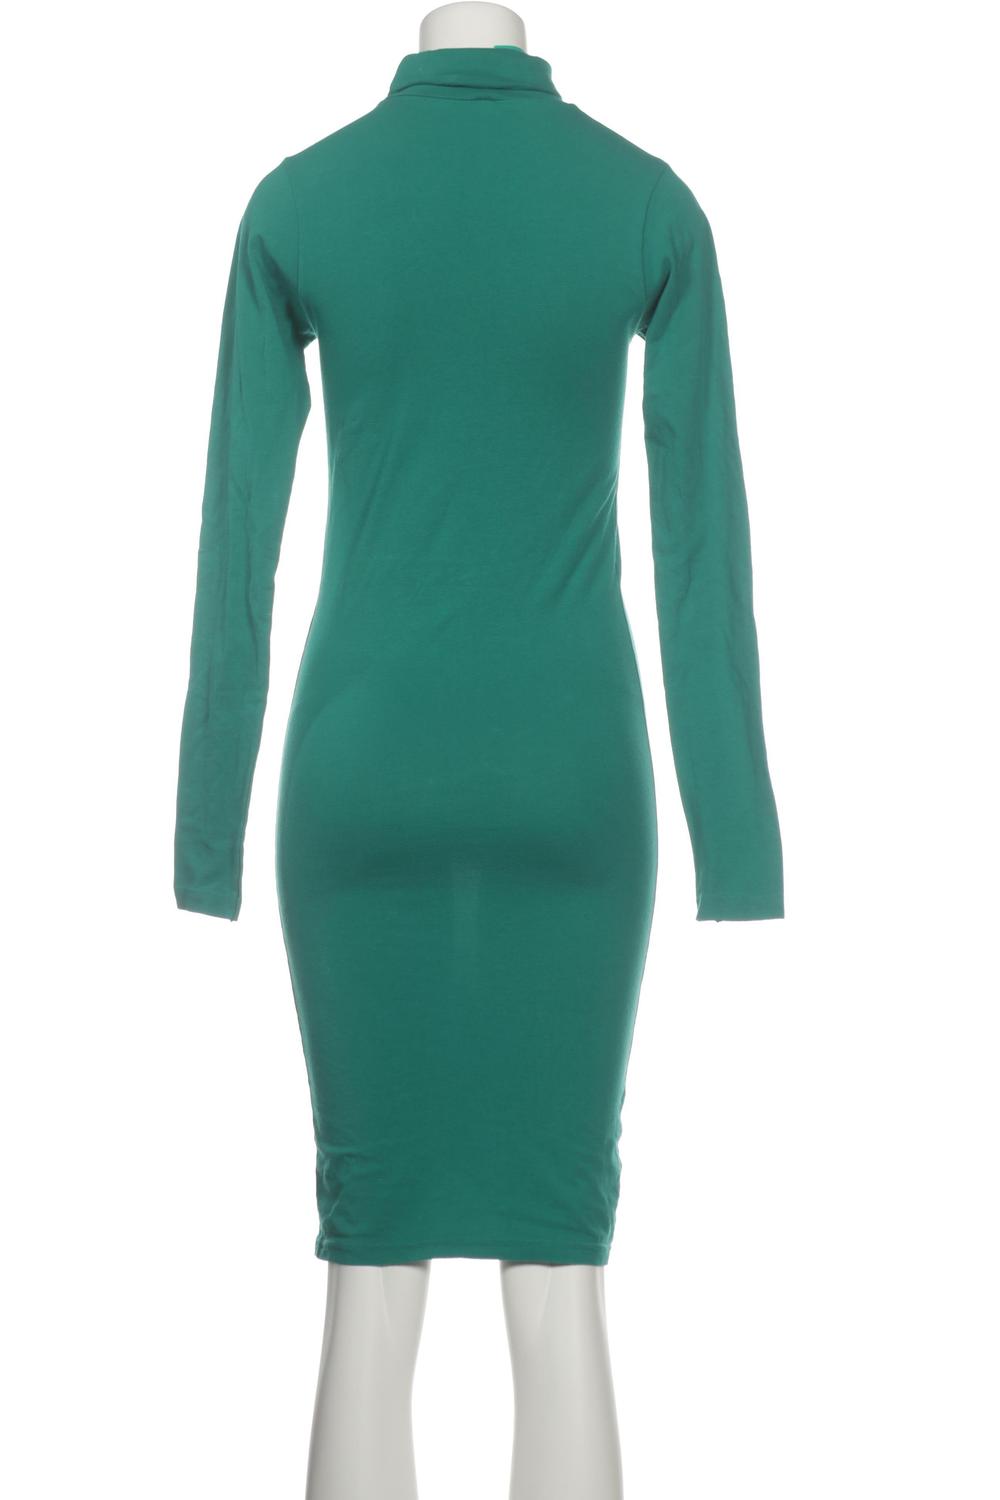 American Apparel Damen Kleid INT S Second Hand kaufen | ubup